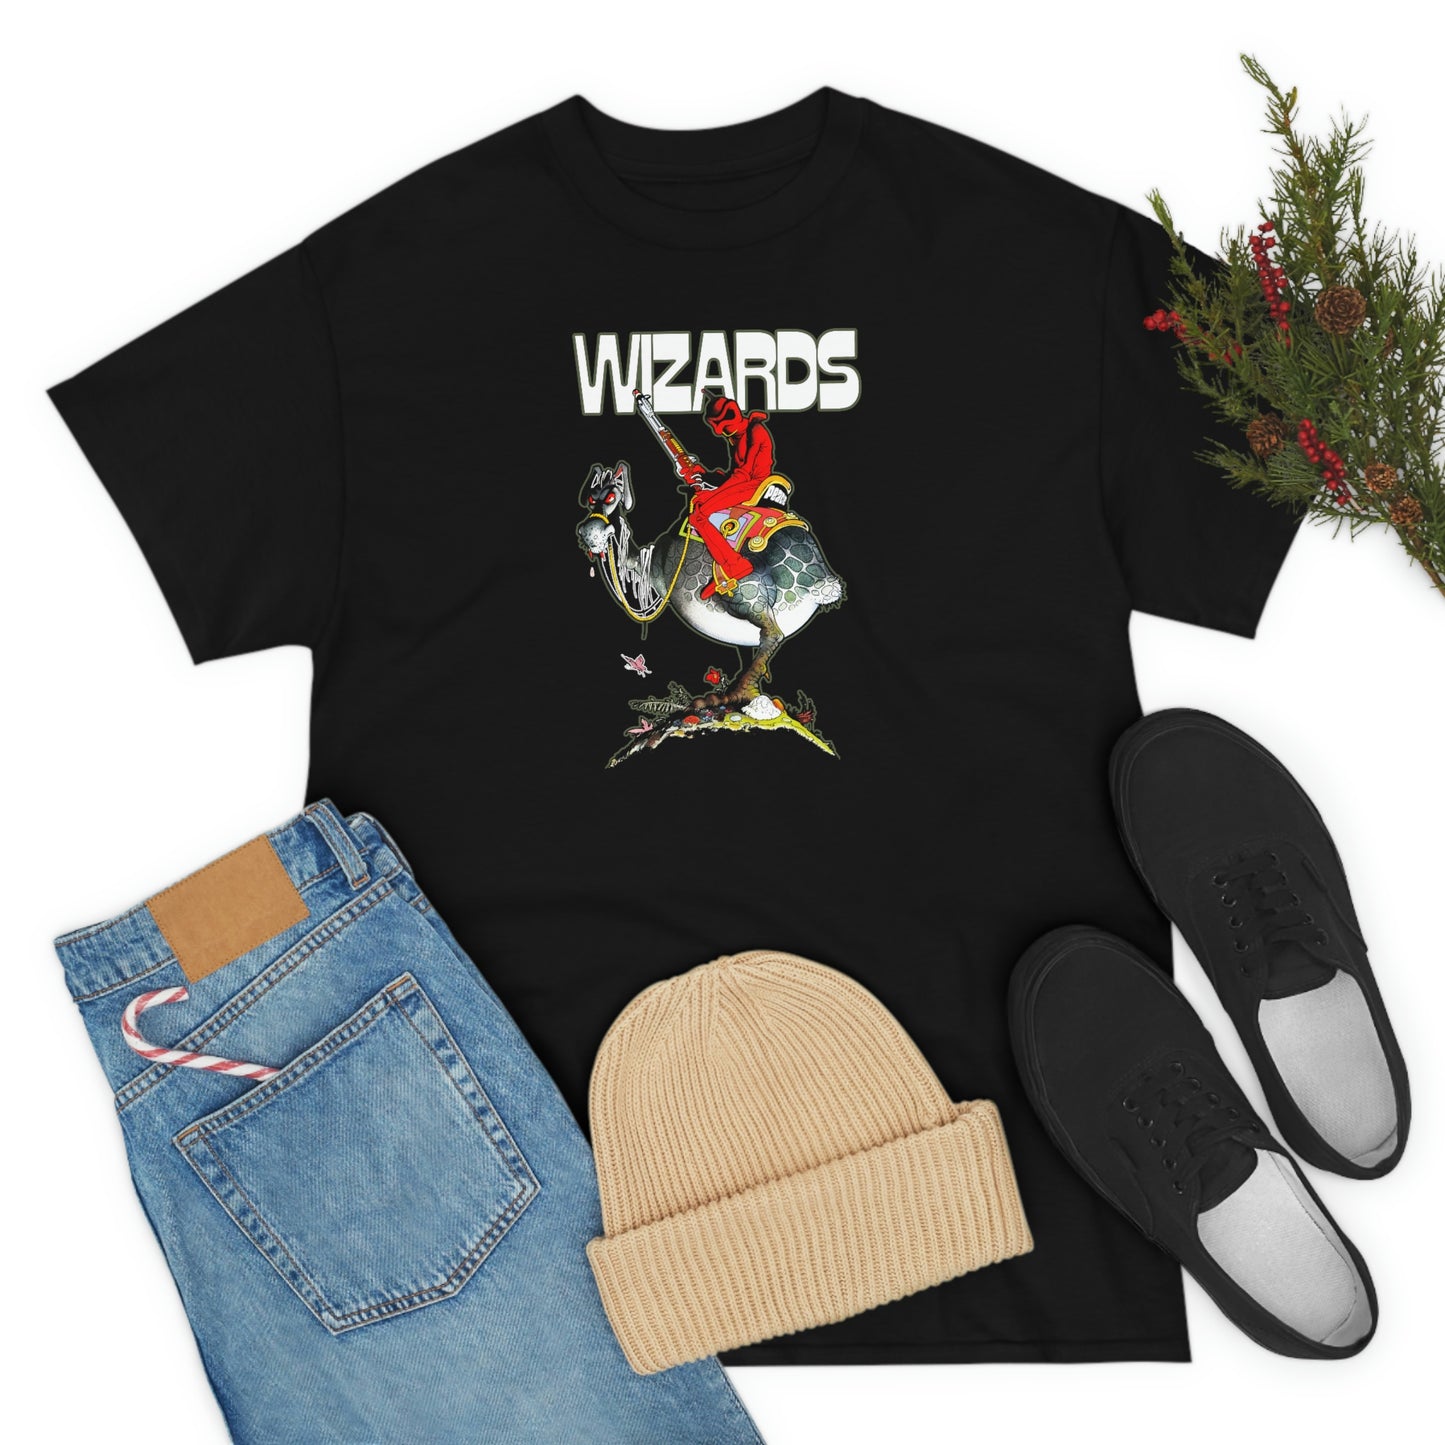 Wizards T-Shirt